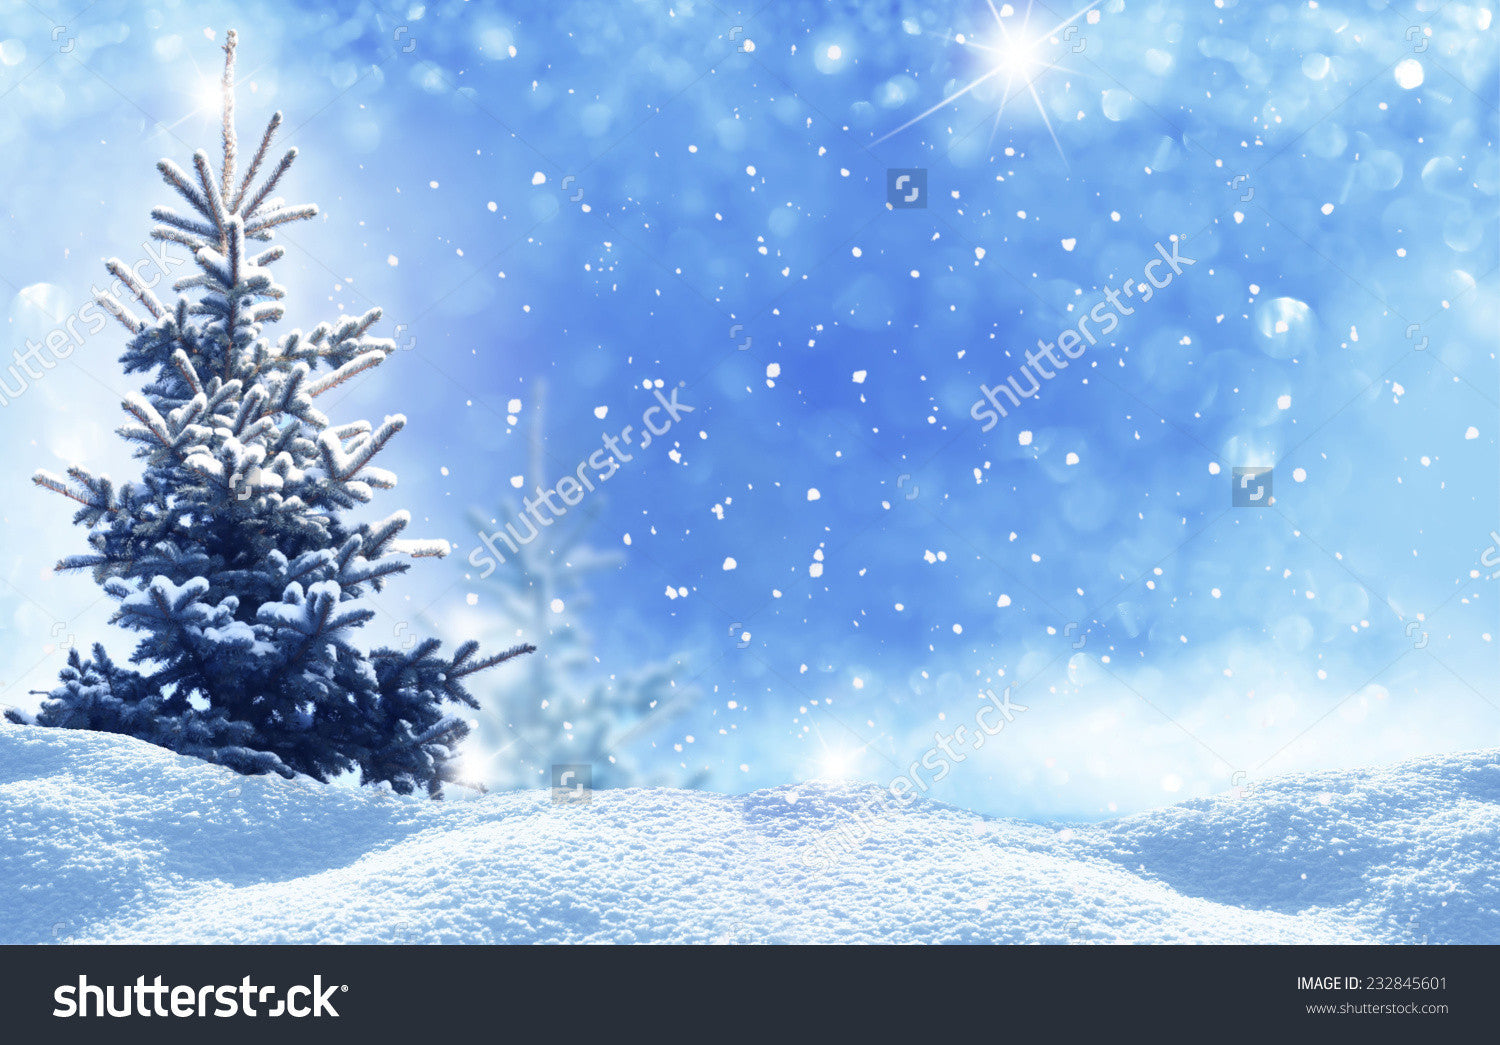 Winter Christmas Landscape Indelible Print Fabric Backdrop